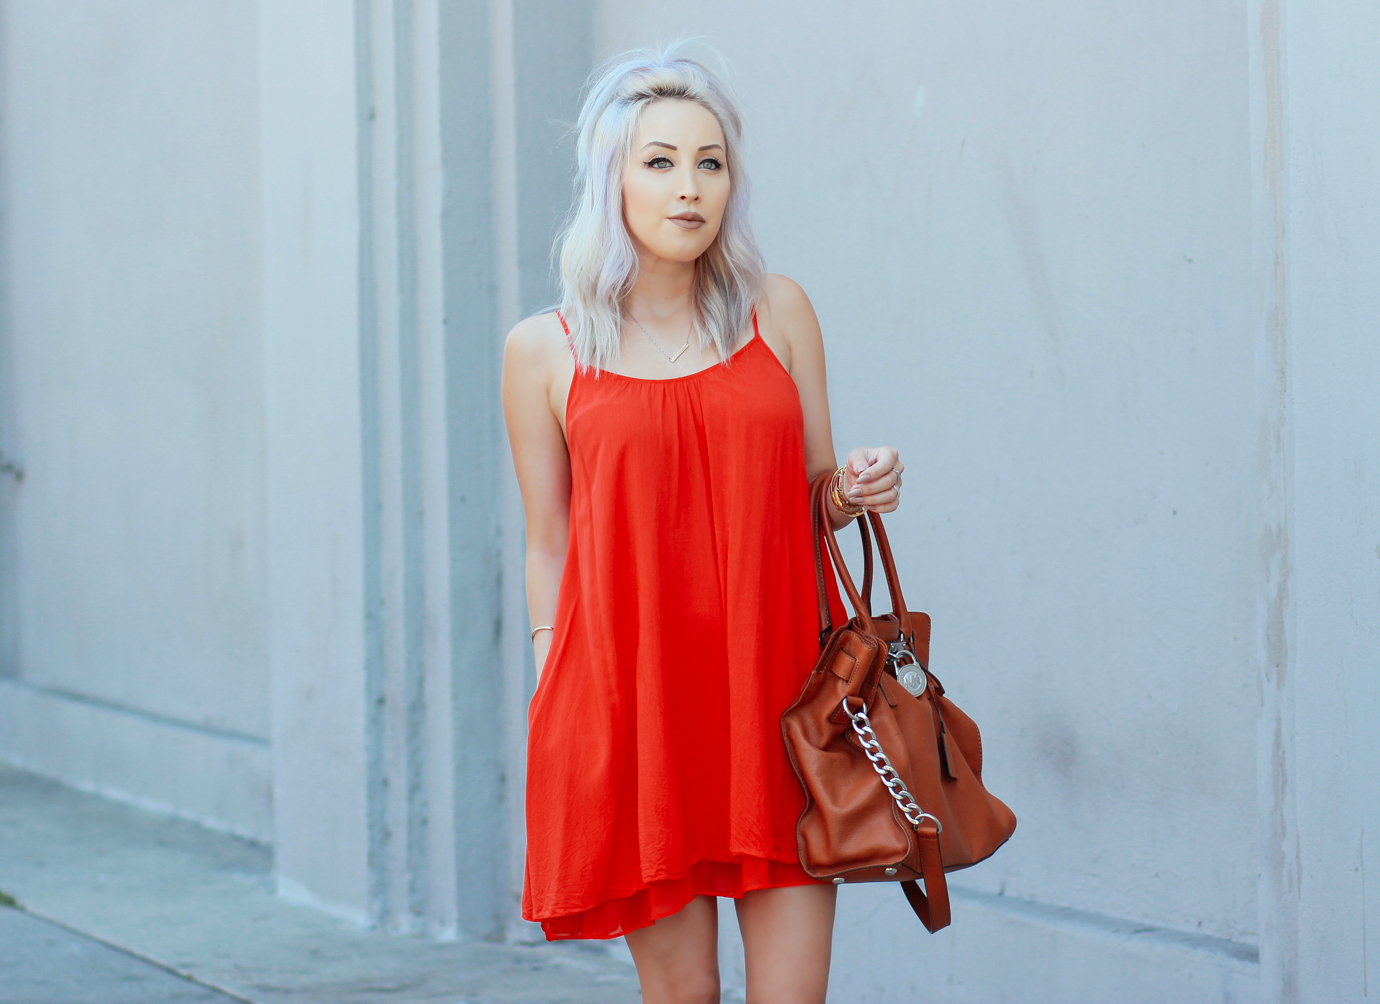 Blondie in the City | Armani Exchange Dress | Bright Orange Summer Dress | Camel Colored Sandals: @pbandjboutique | Michael Kors Bag